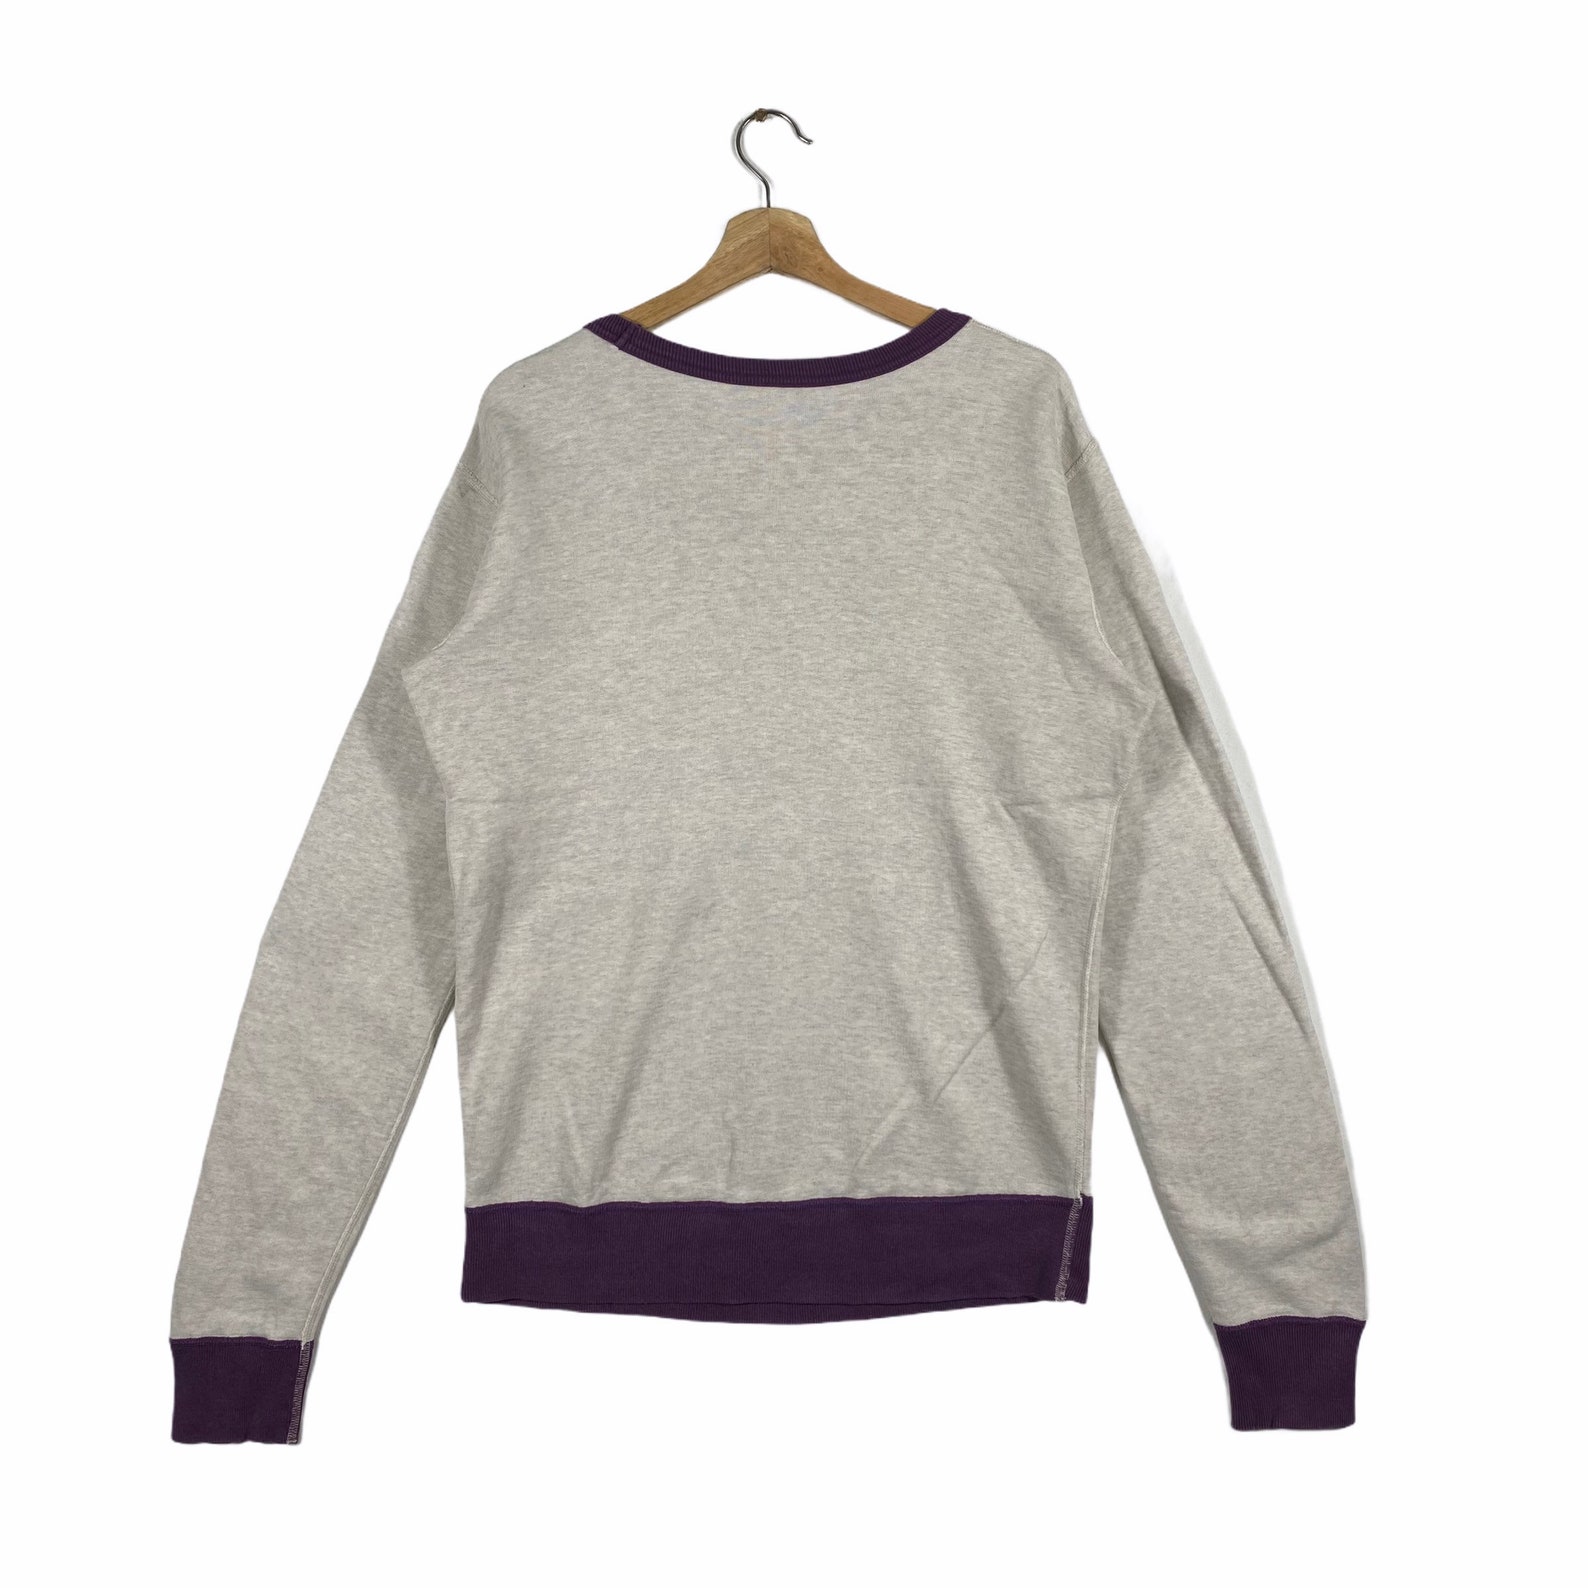 Vintage Hysteric Glamour Sweatshirt | Etsy